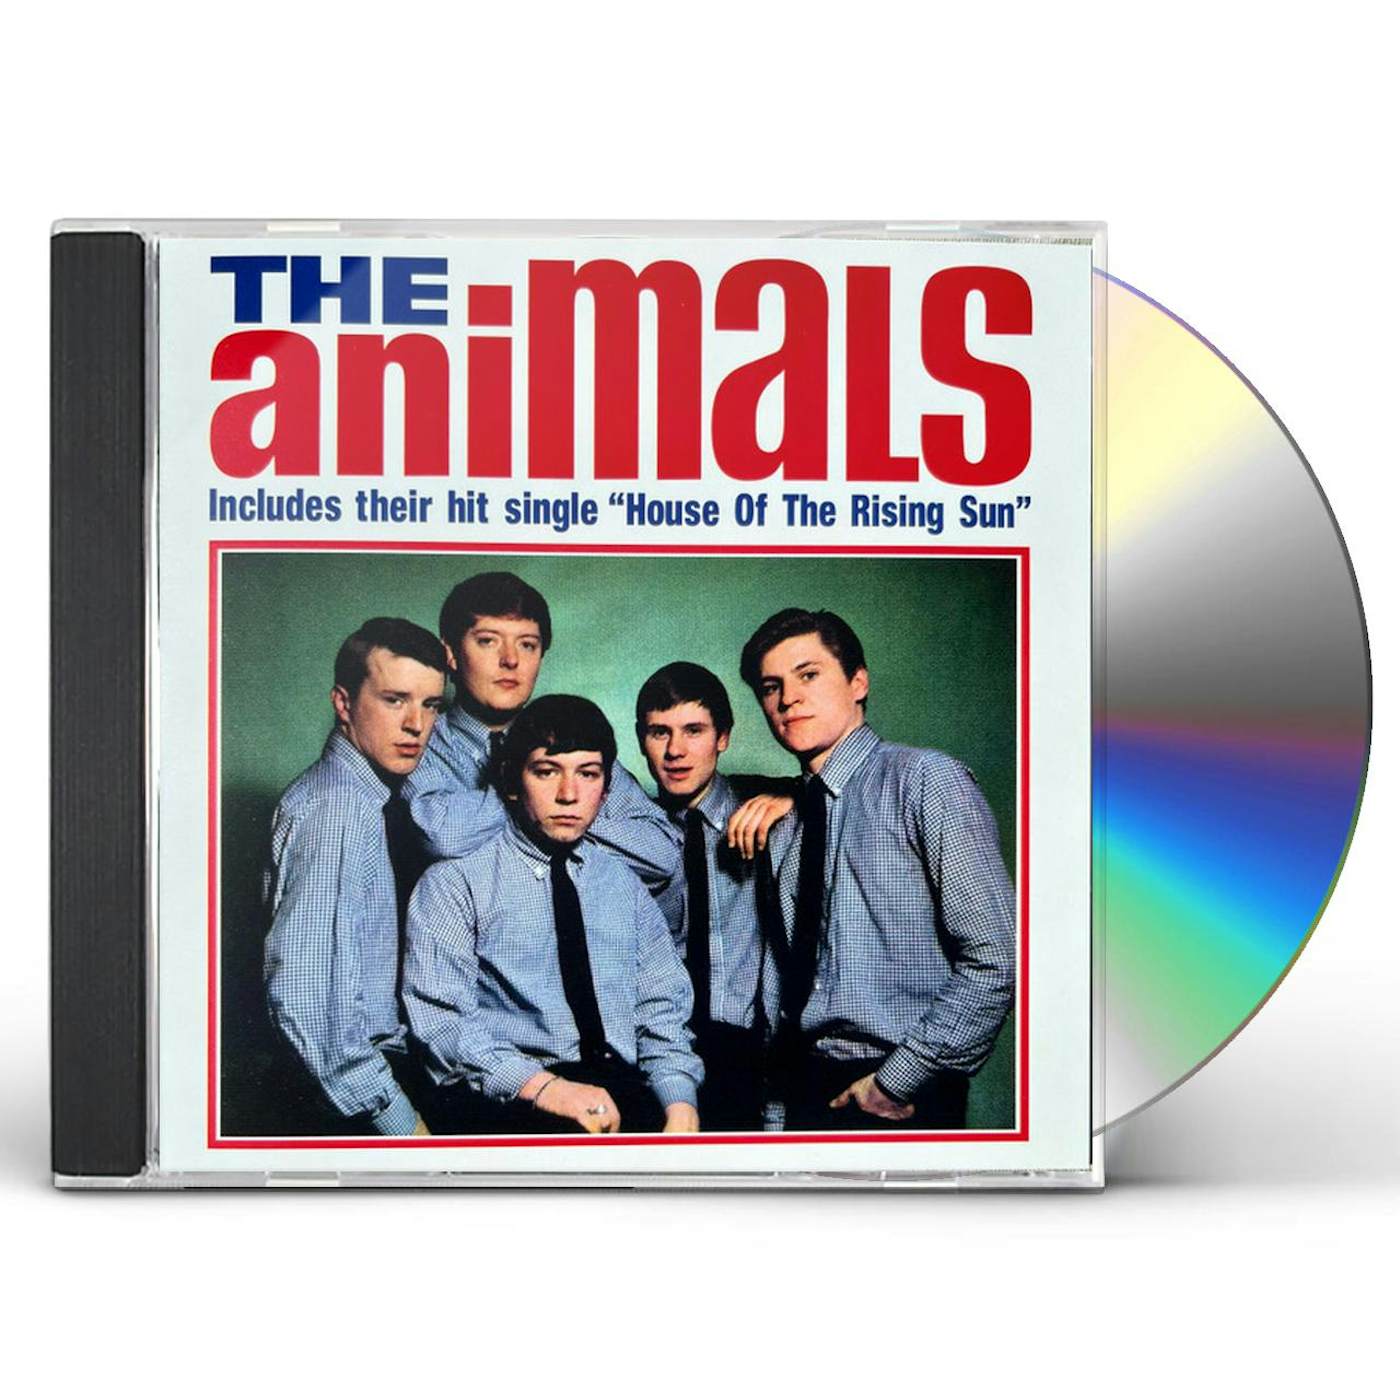 The Animals CD